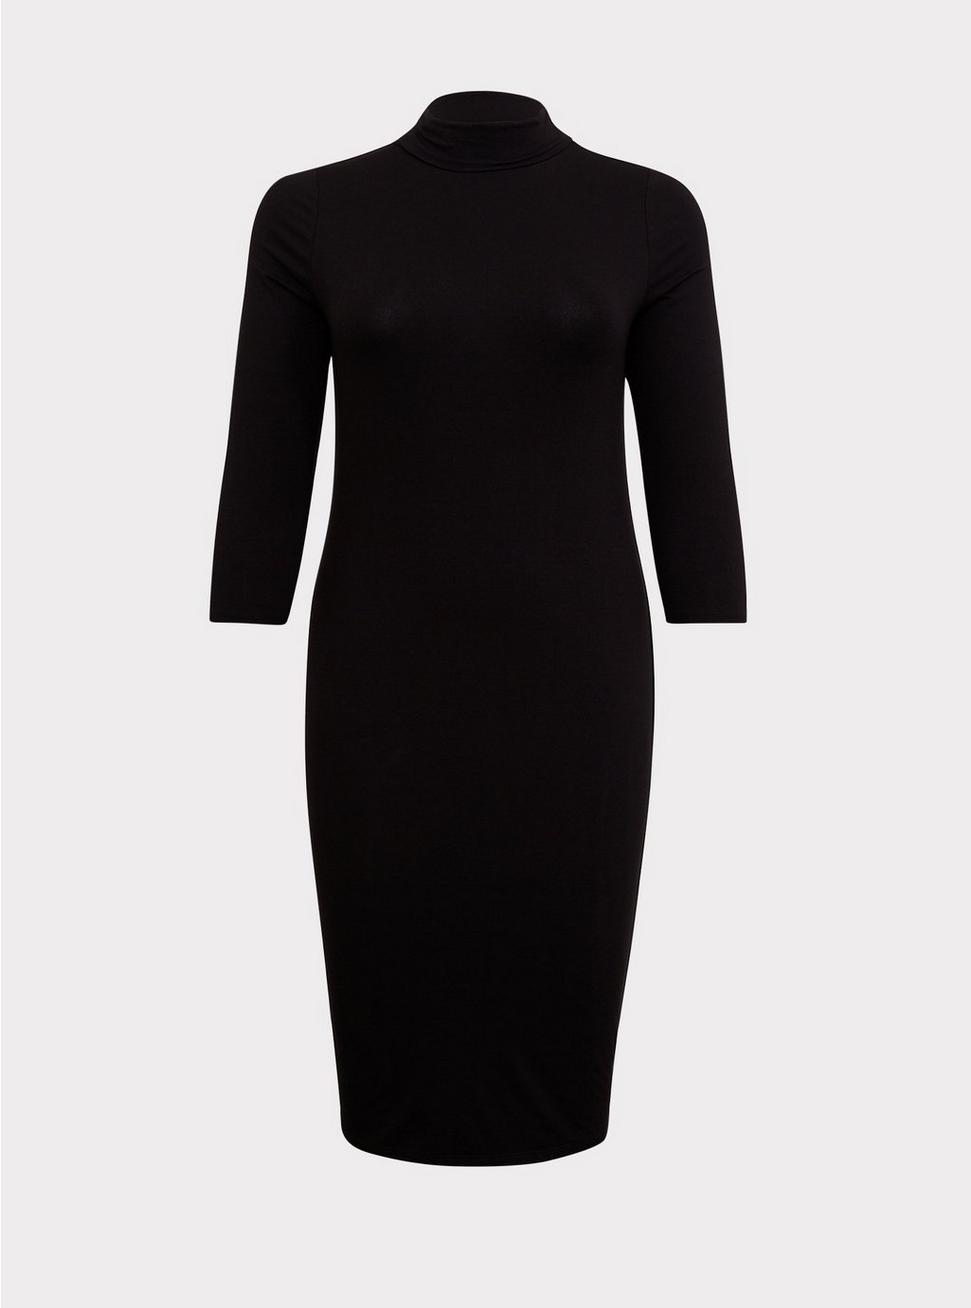 Plus Size - Black Jersey Turtleneck Bodycon Midi Dress - Torrid